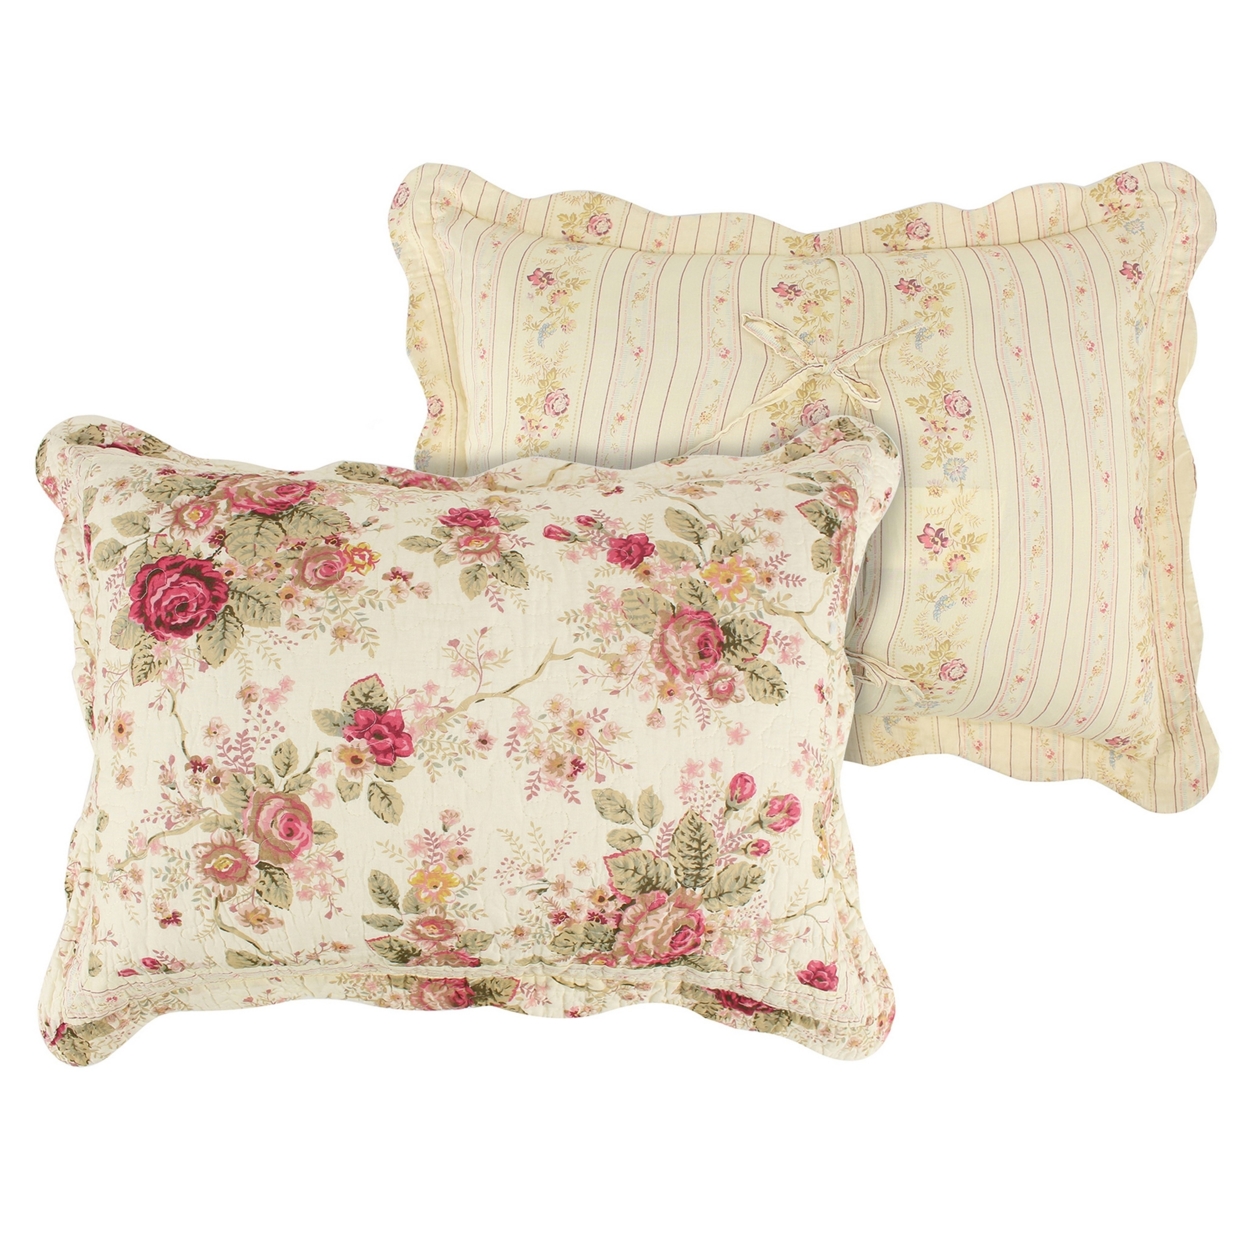 Rosle 3 Piece King Bedspread Set, Floral Print, Scalloped, Cream, Pink- Saltoro Sherpi